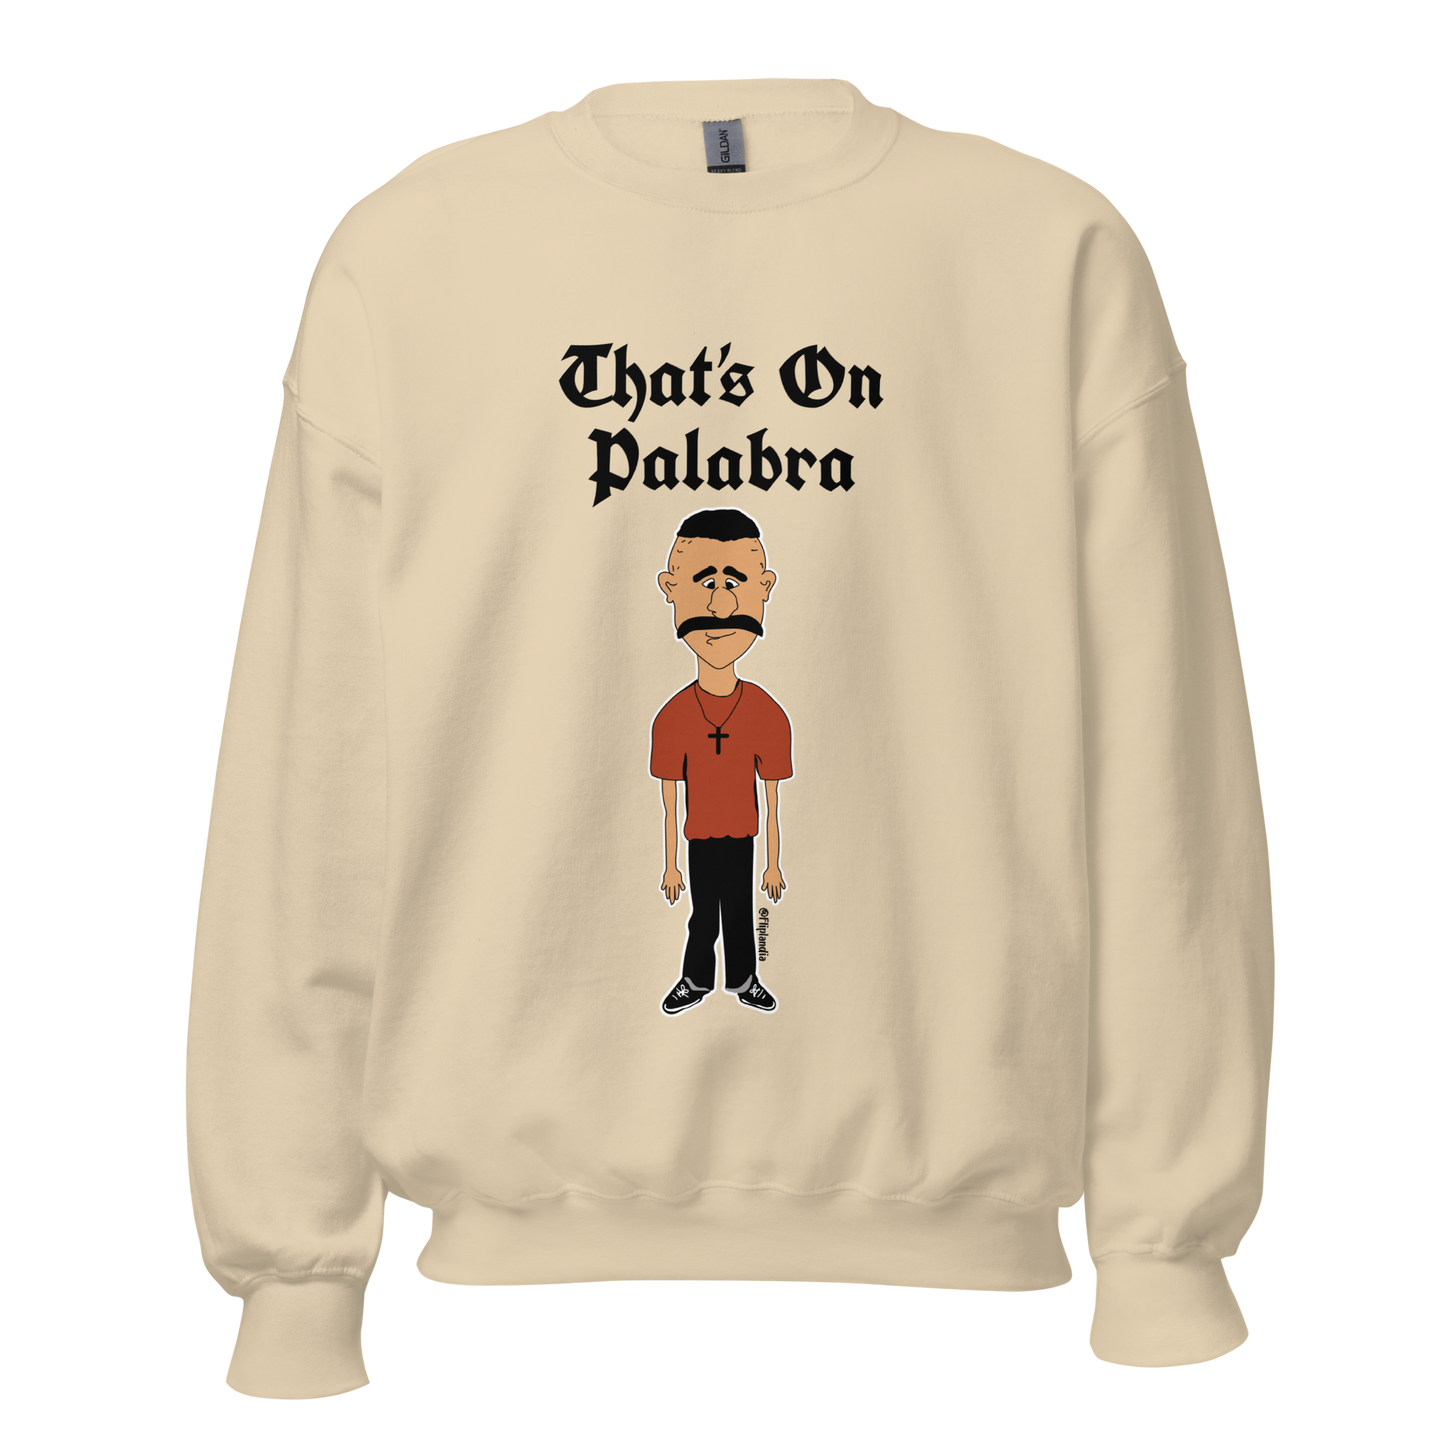 That's On Palabra - Fliplandia Unisex Sweatshirt